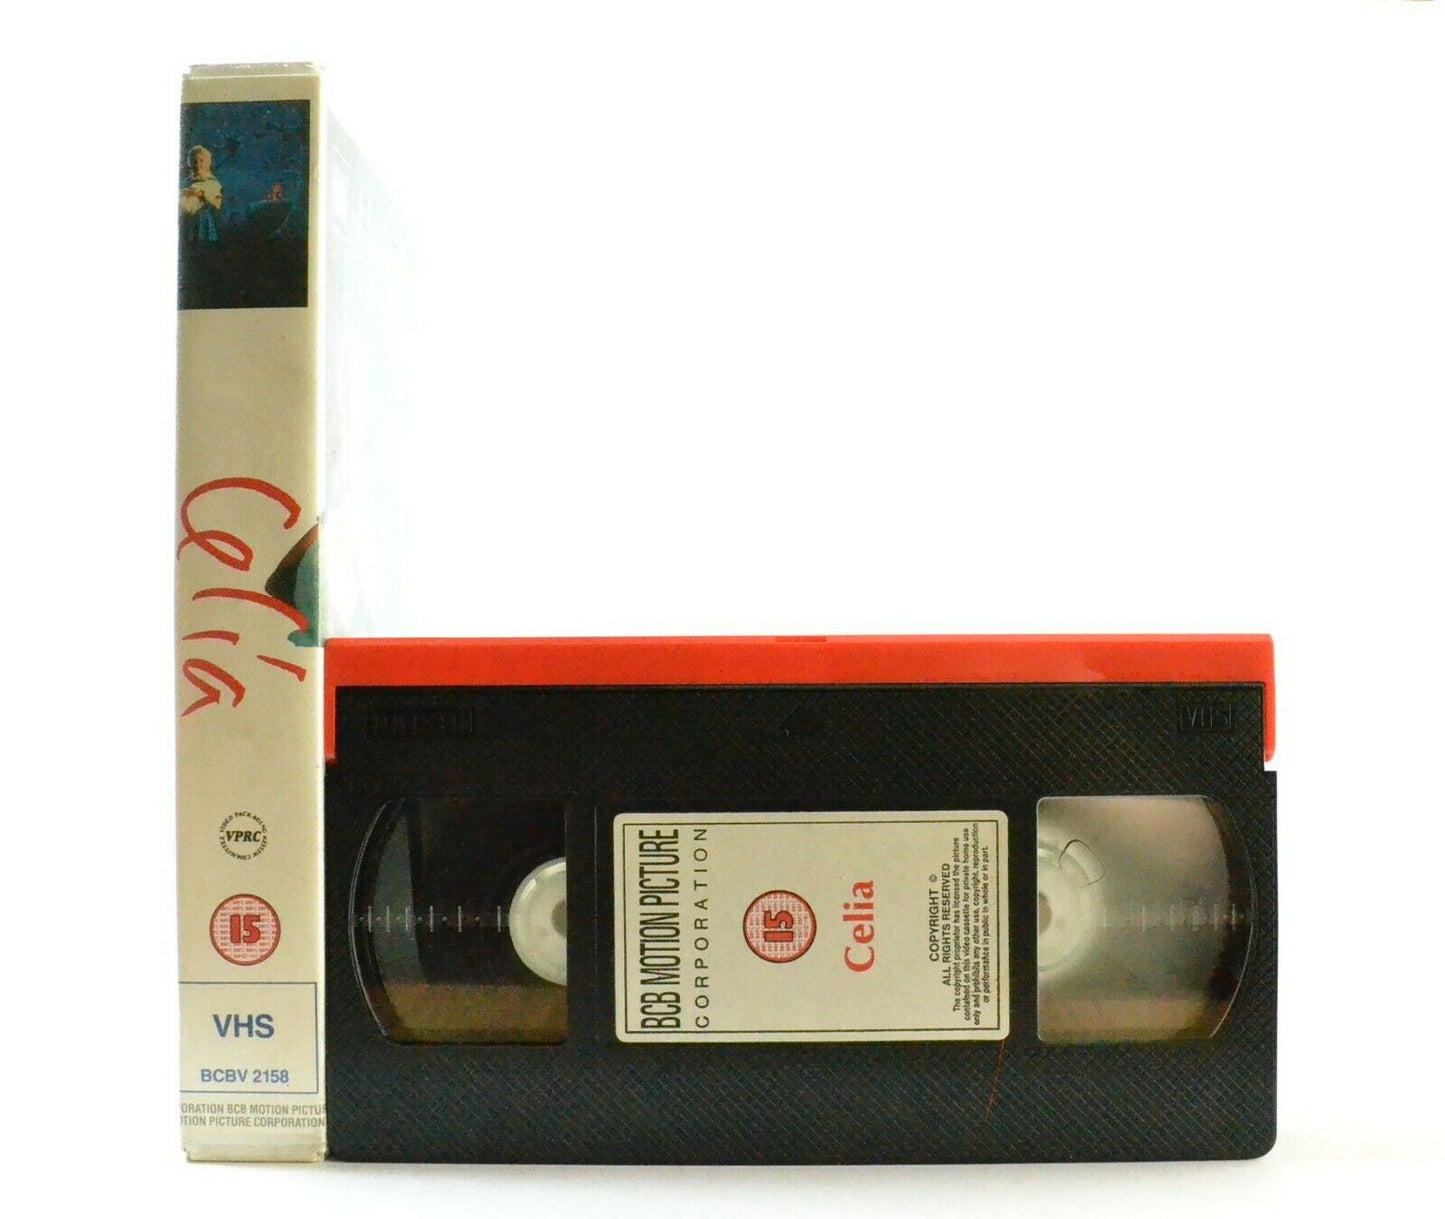 Celia: Child Of Terror - A.Turner (1989) - Drama - Large Box - R.Smart - VHS-